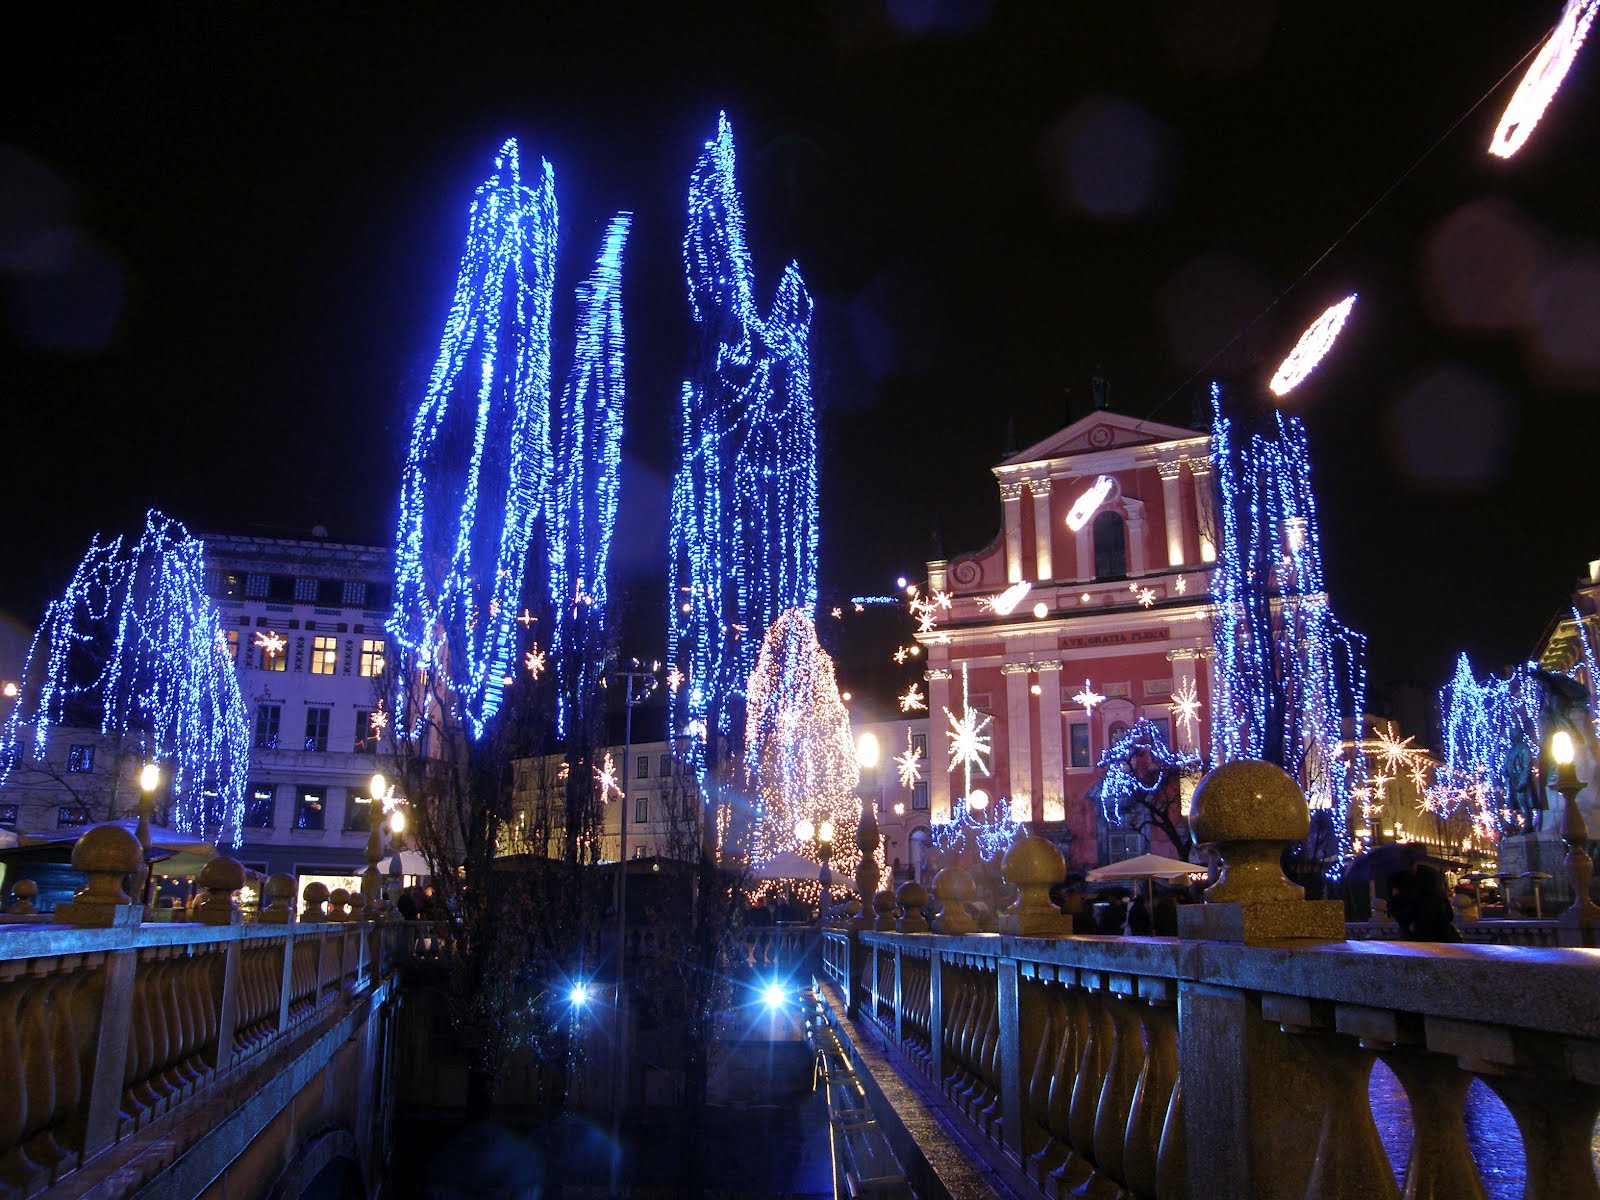 Ljubljana Christmas Market 2012